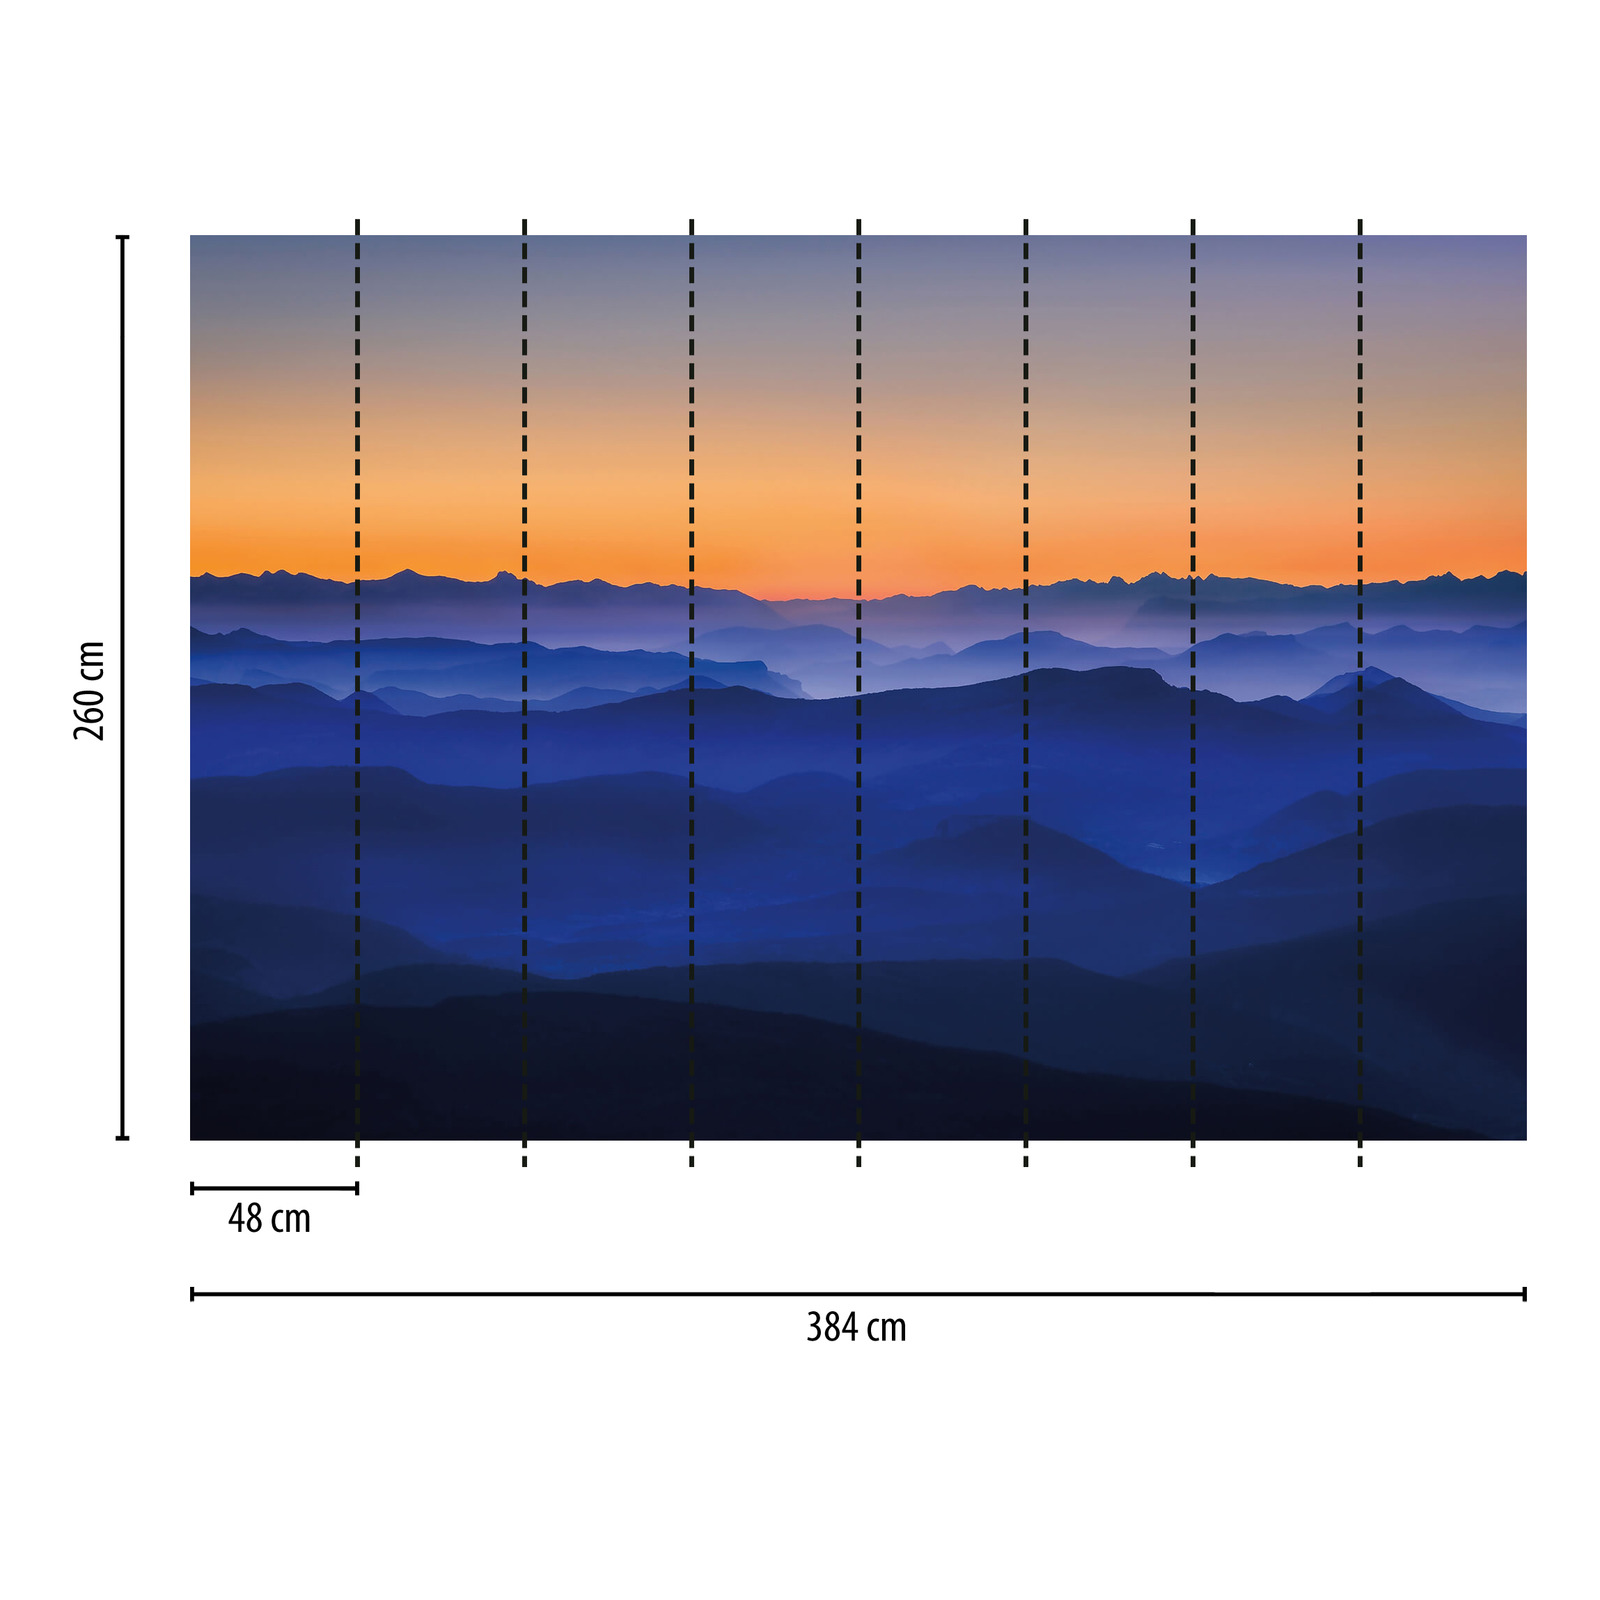             Photo wallpaper mountains at sunrise - blue, orange, yellow
        